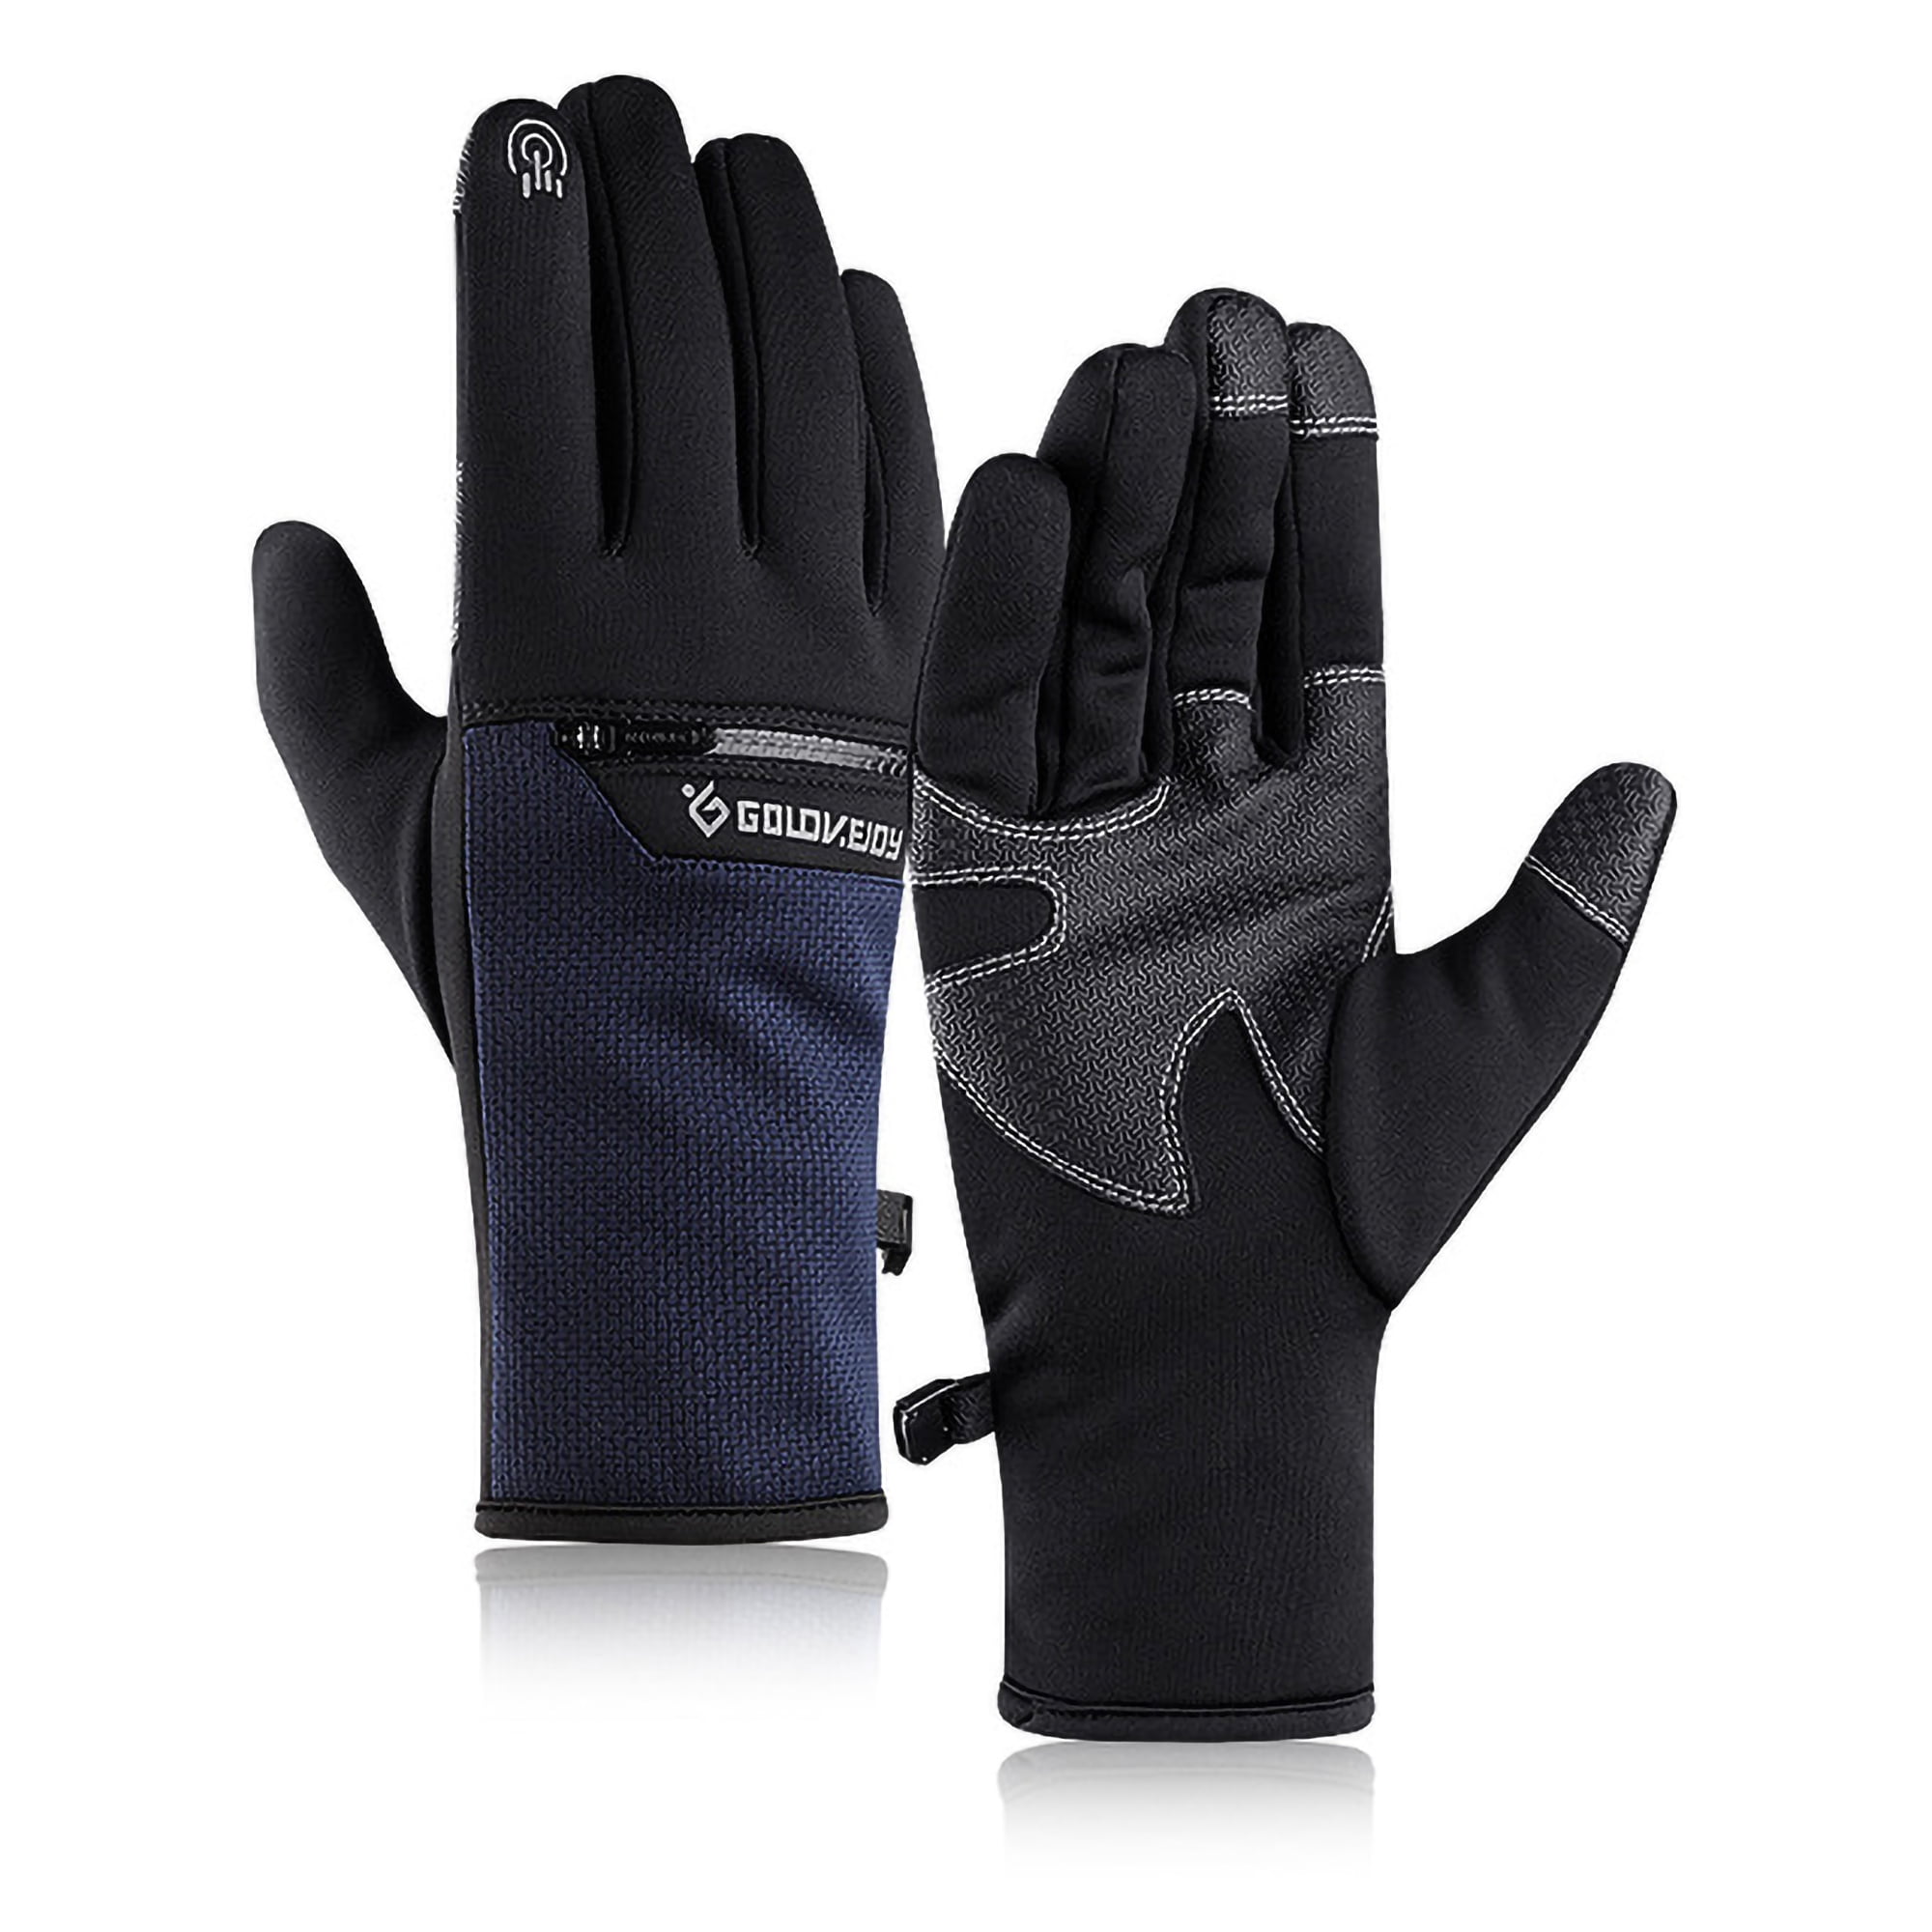 1Pair Zipper Moto Driving Mittens Winter Ski Warm Full Finger Gloves Cold-proof